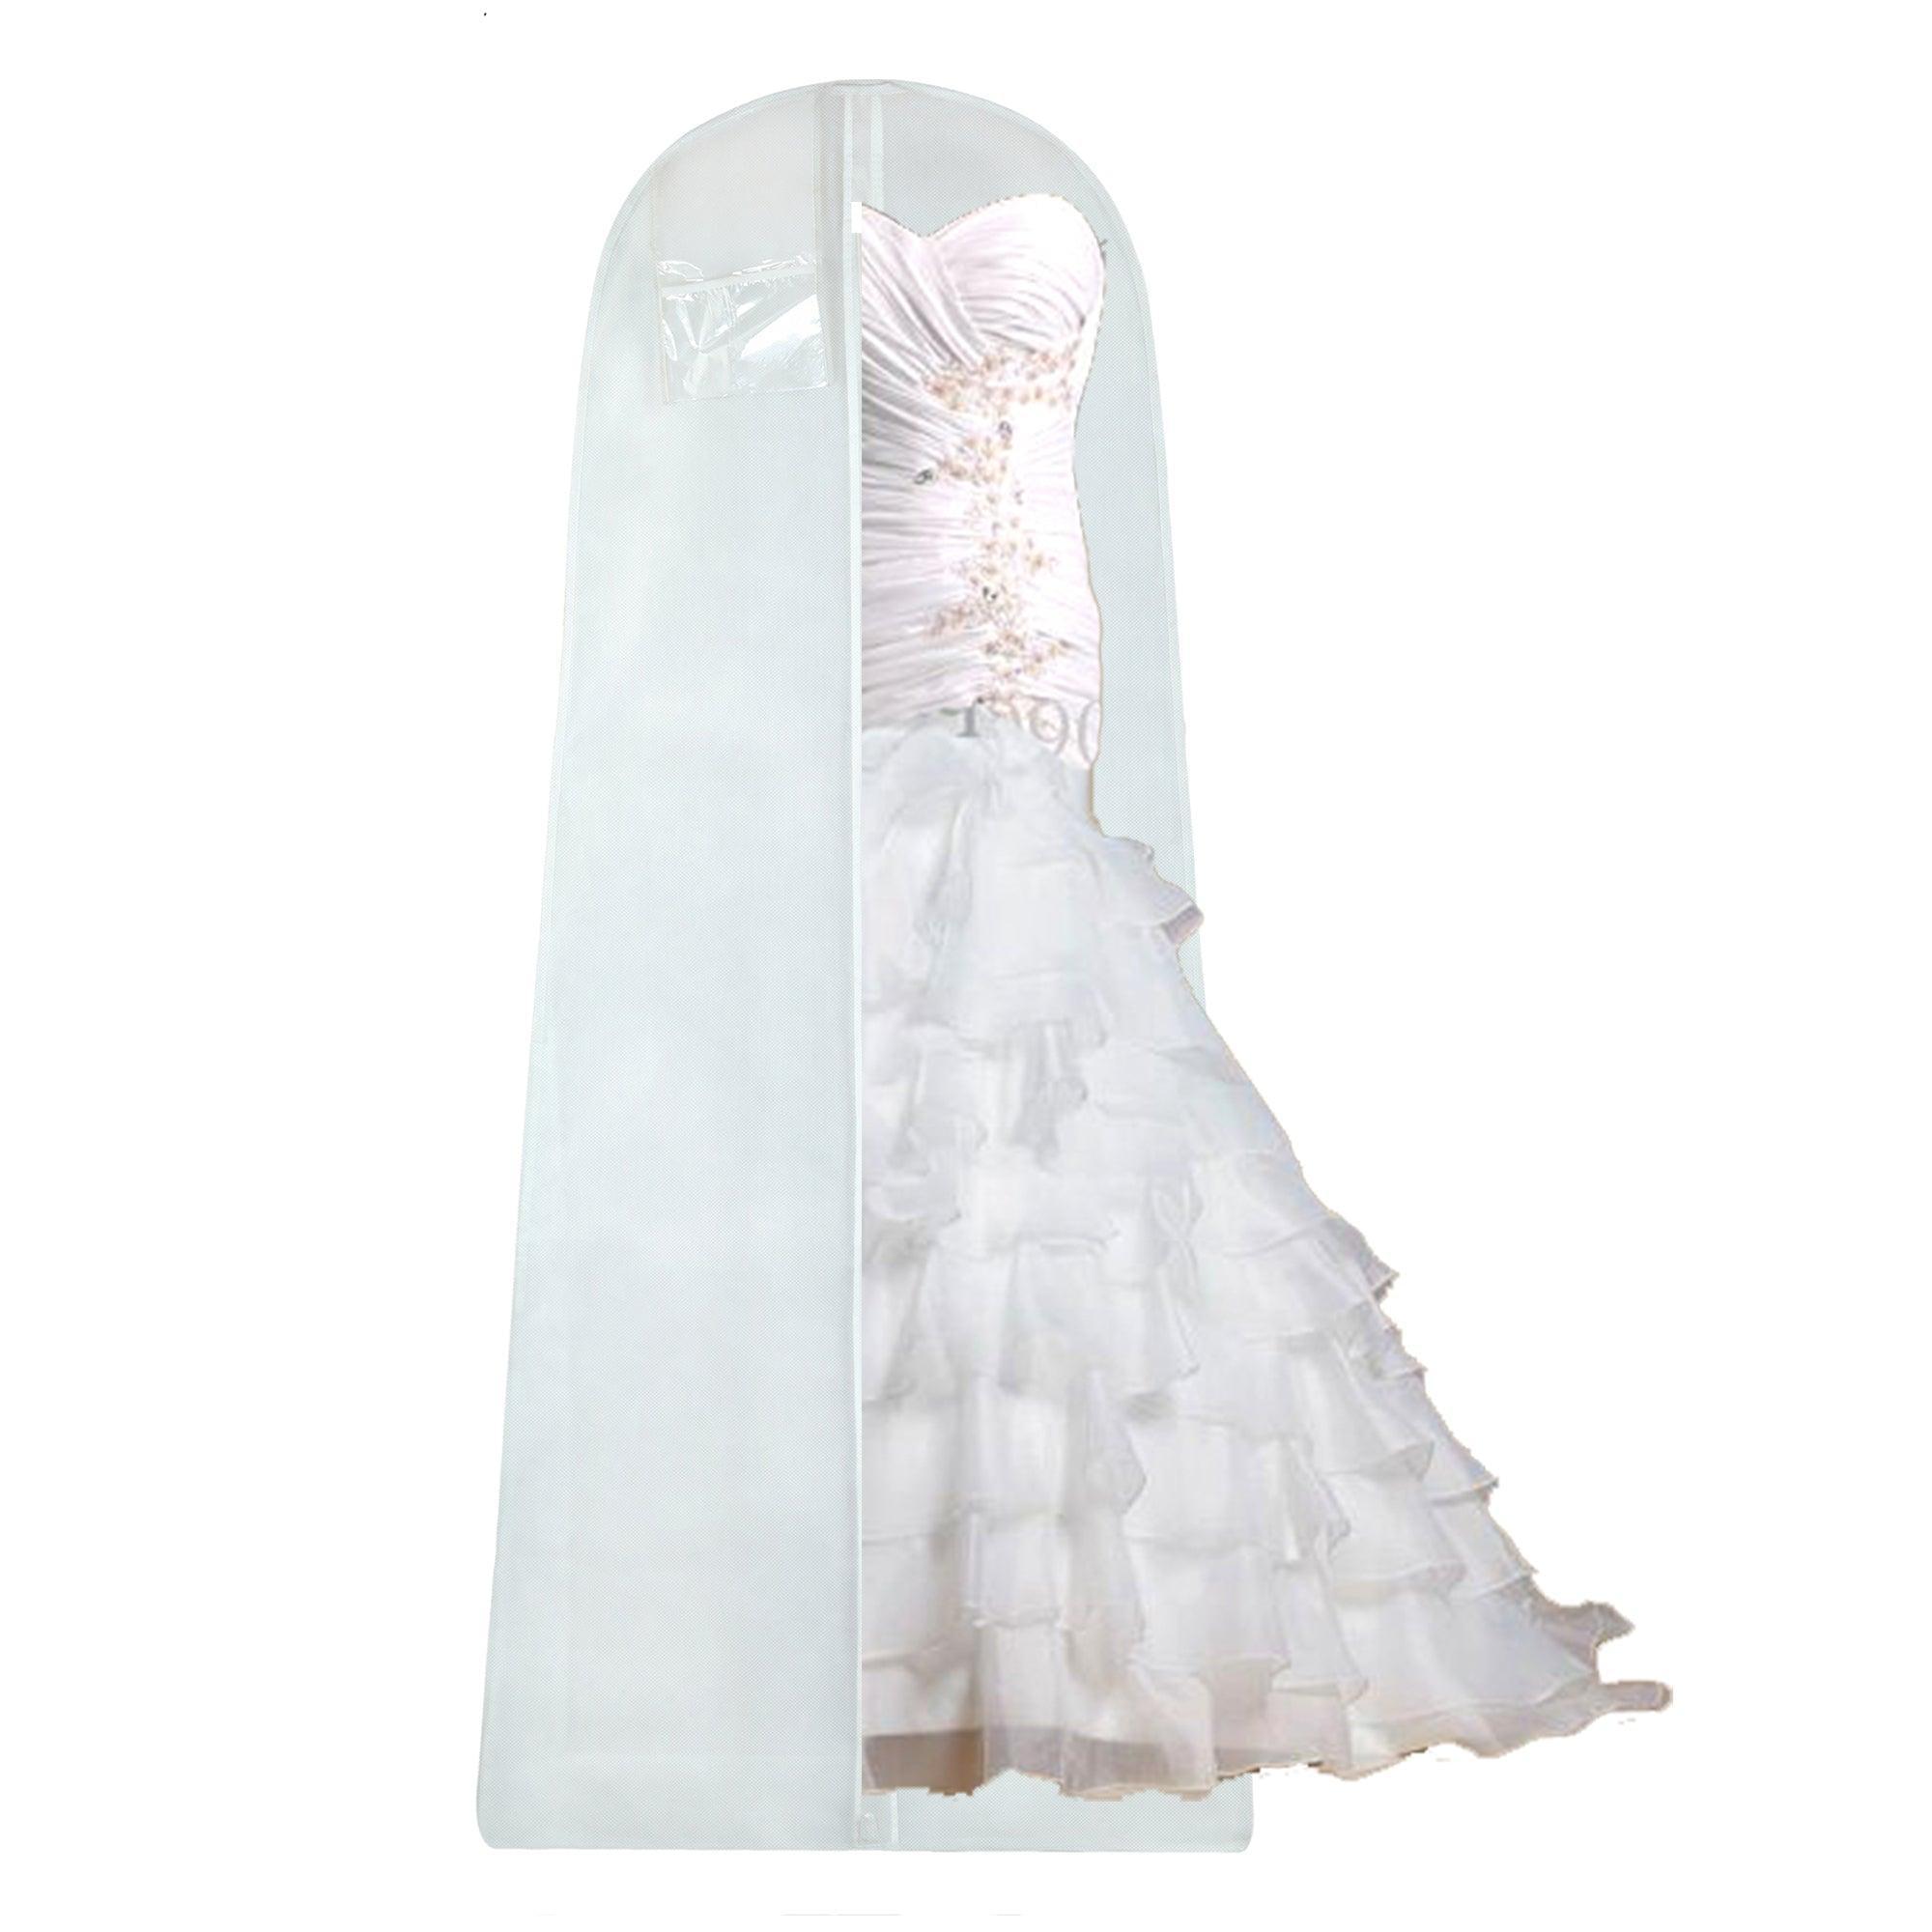 Standard 8" Gusset Bridal Dress Cover Bags - Wedcova UK Ltd